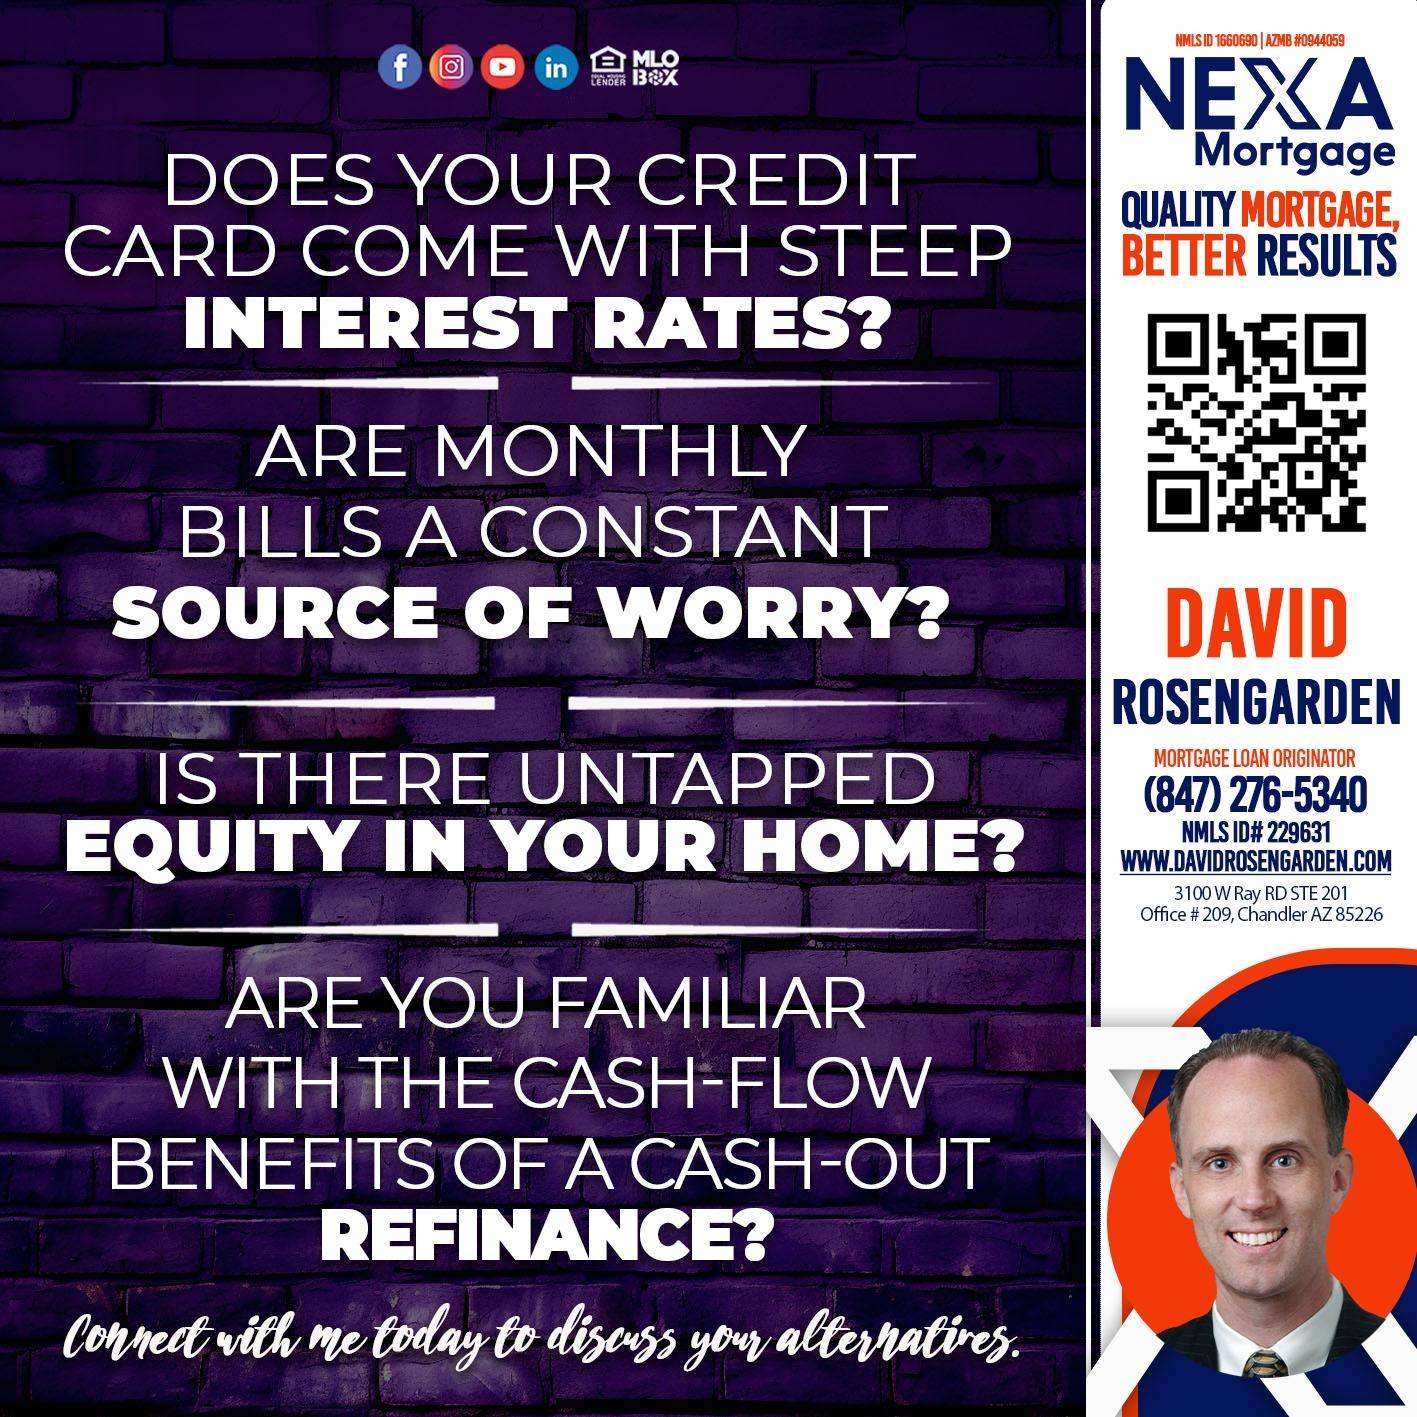 CREDIT CARD 3 - David Rosengarden - Mortgage Loan Originator